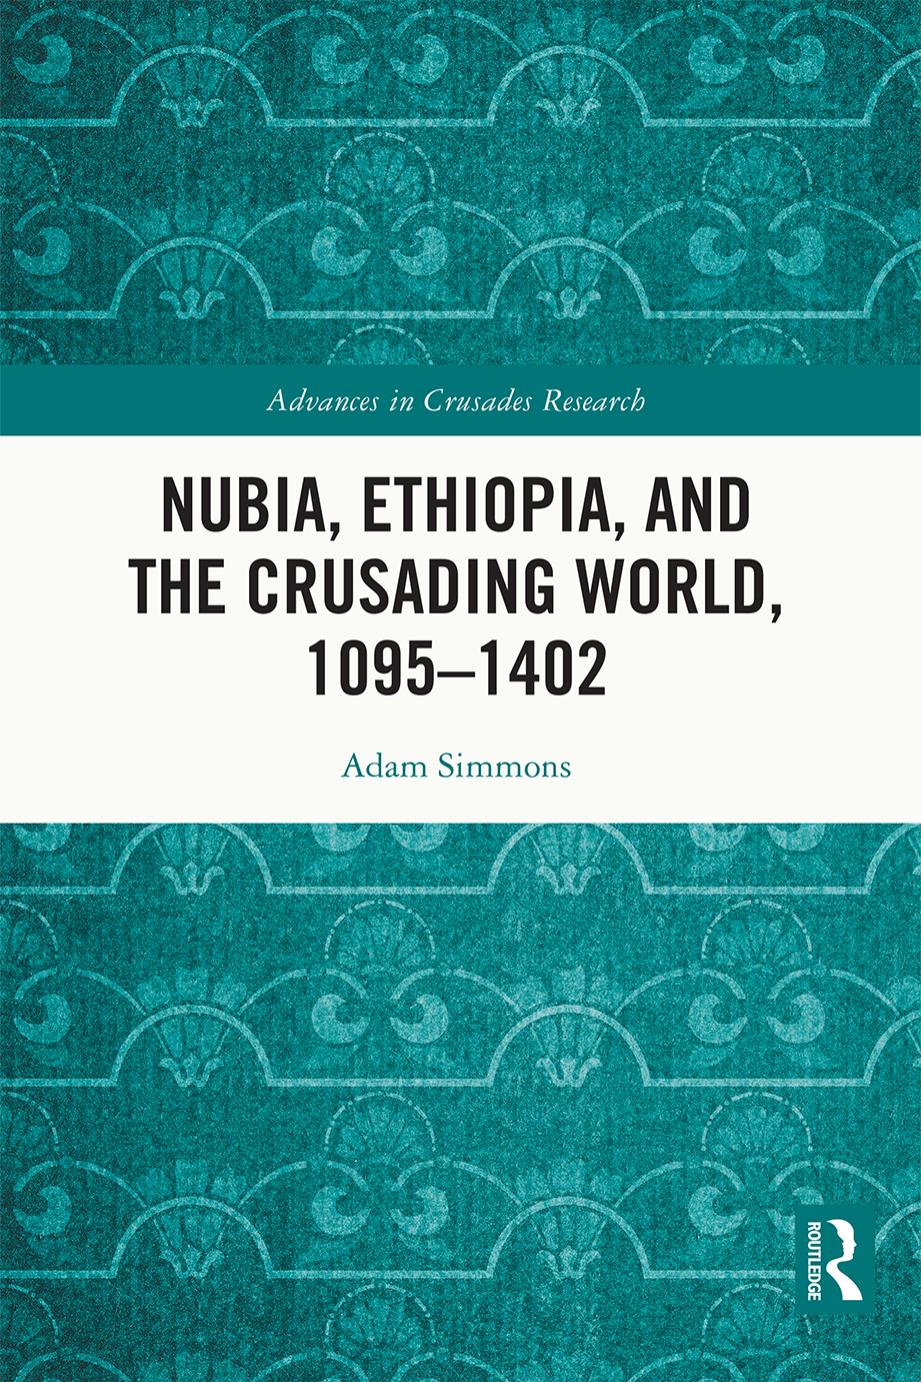 Nubia, Ethiopia, and the Crusading World, 1095â1402 by Adam Simmons